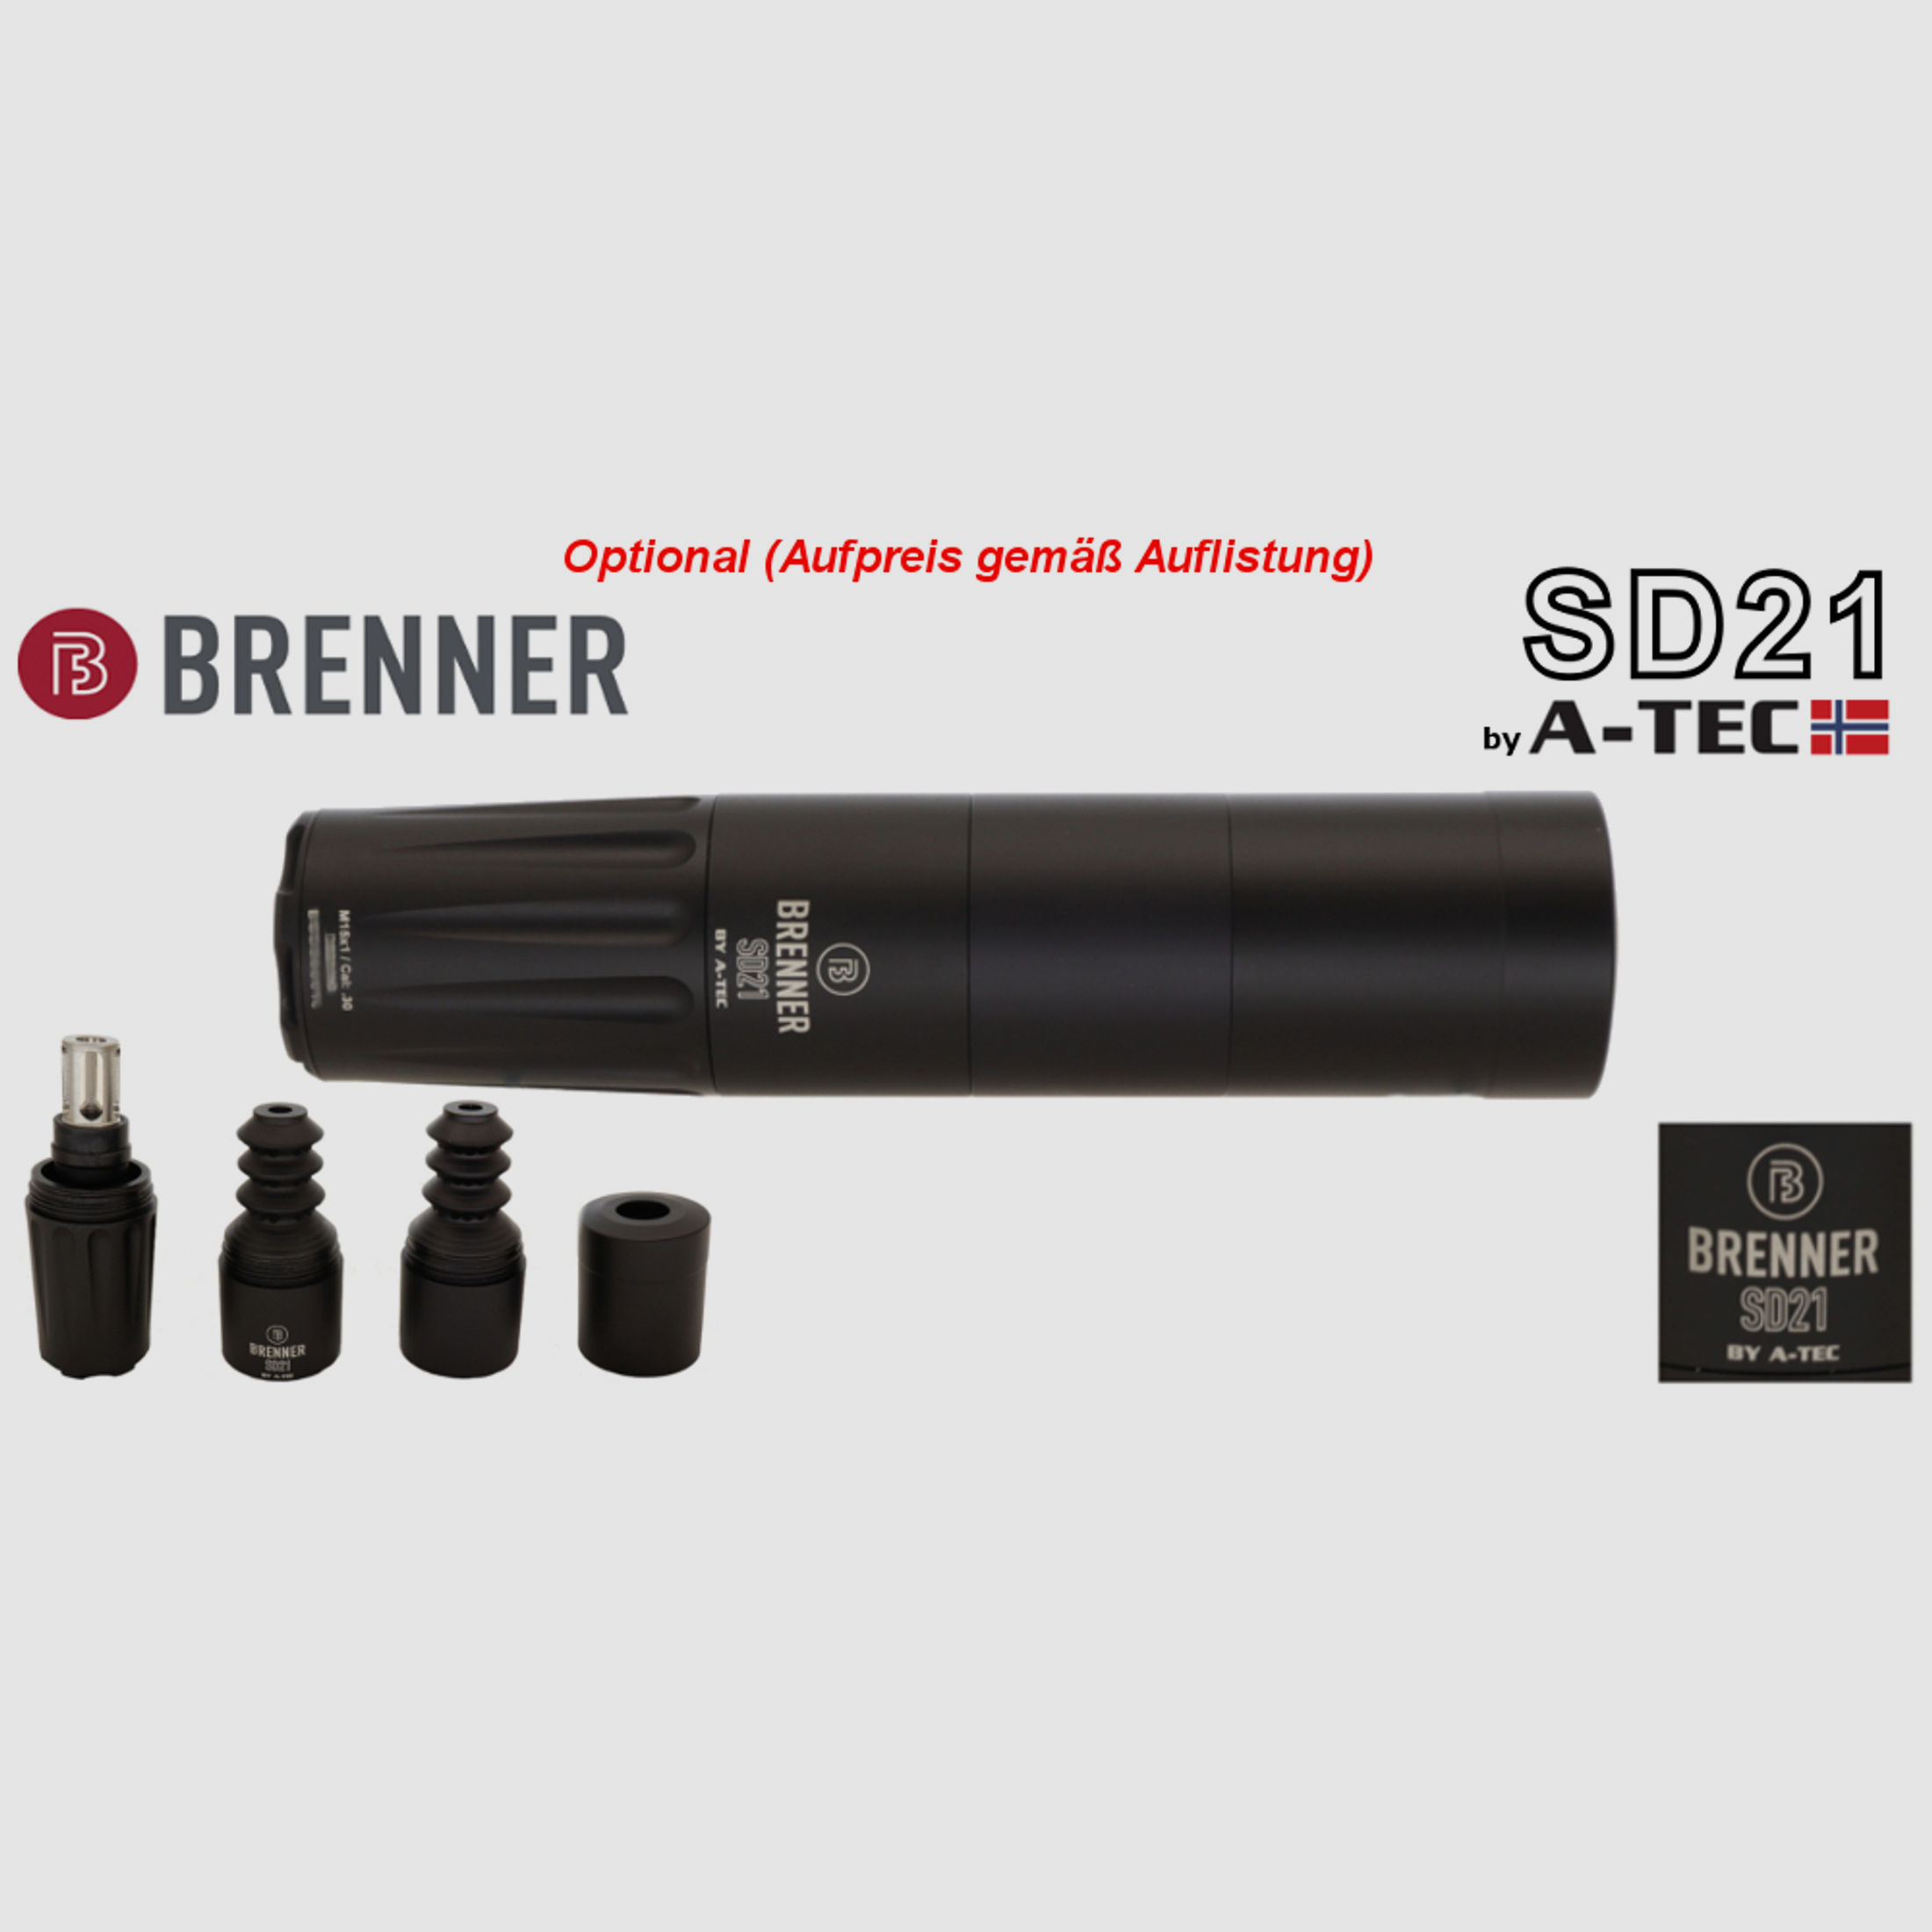  Bergara B14 B&H Prohunter LINKS Lochschaft mit Kahles Helia 2.4-12x56 fertig montiert / Optional: Brenner Schalldämpfer